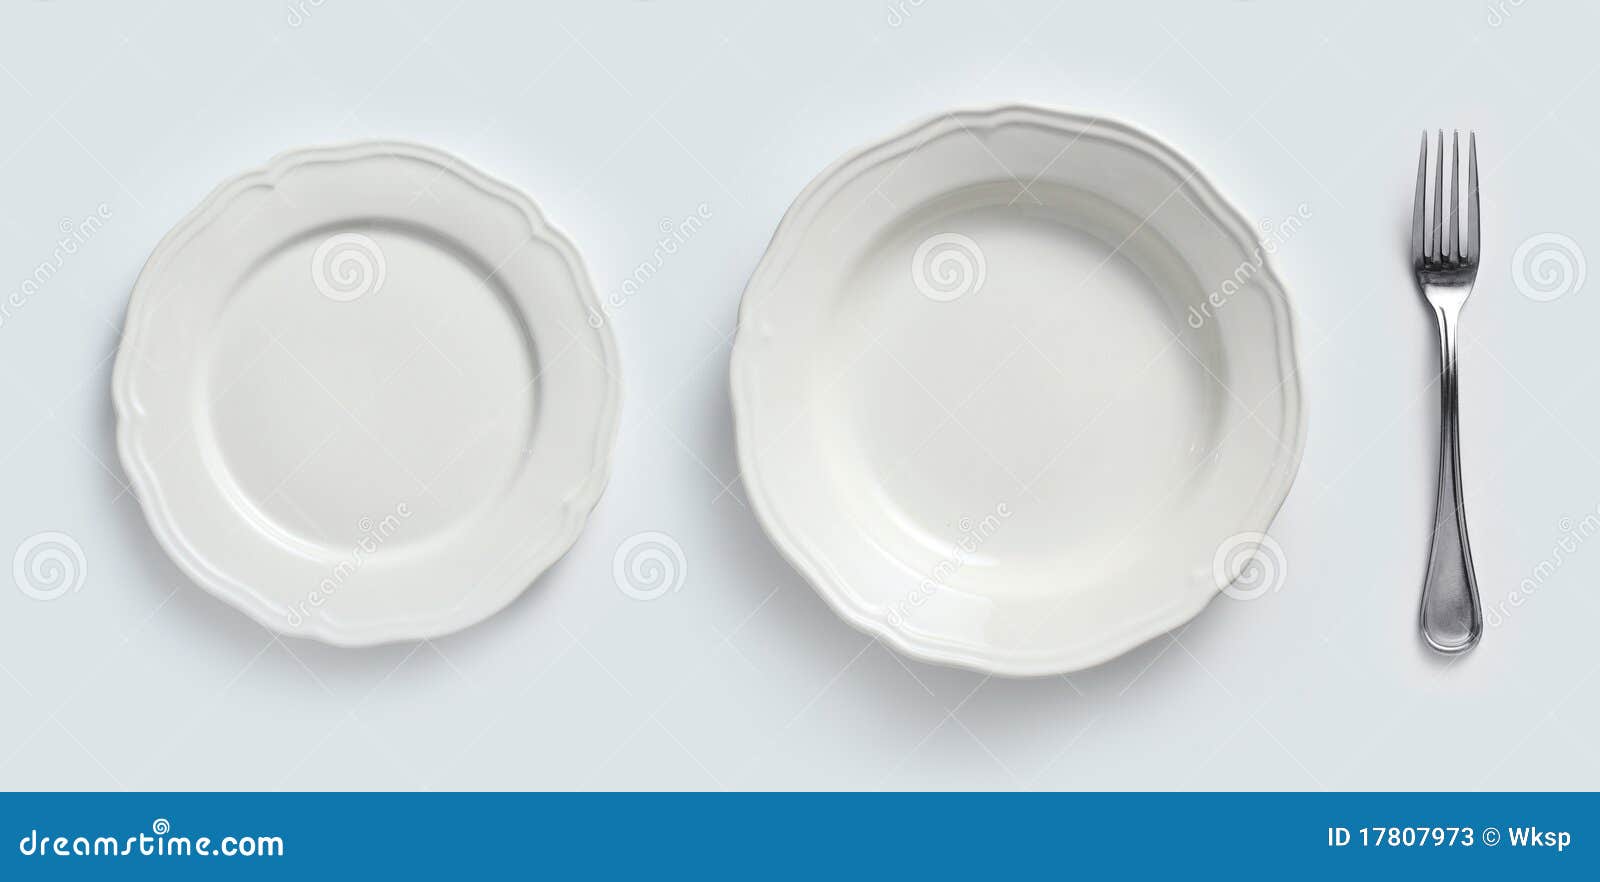 ceramic plates & cutlery